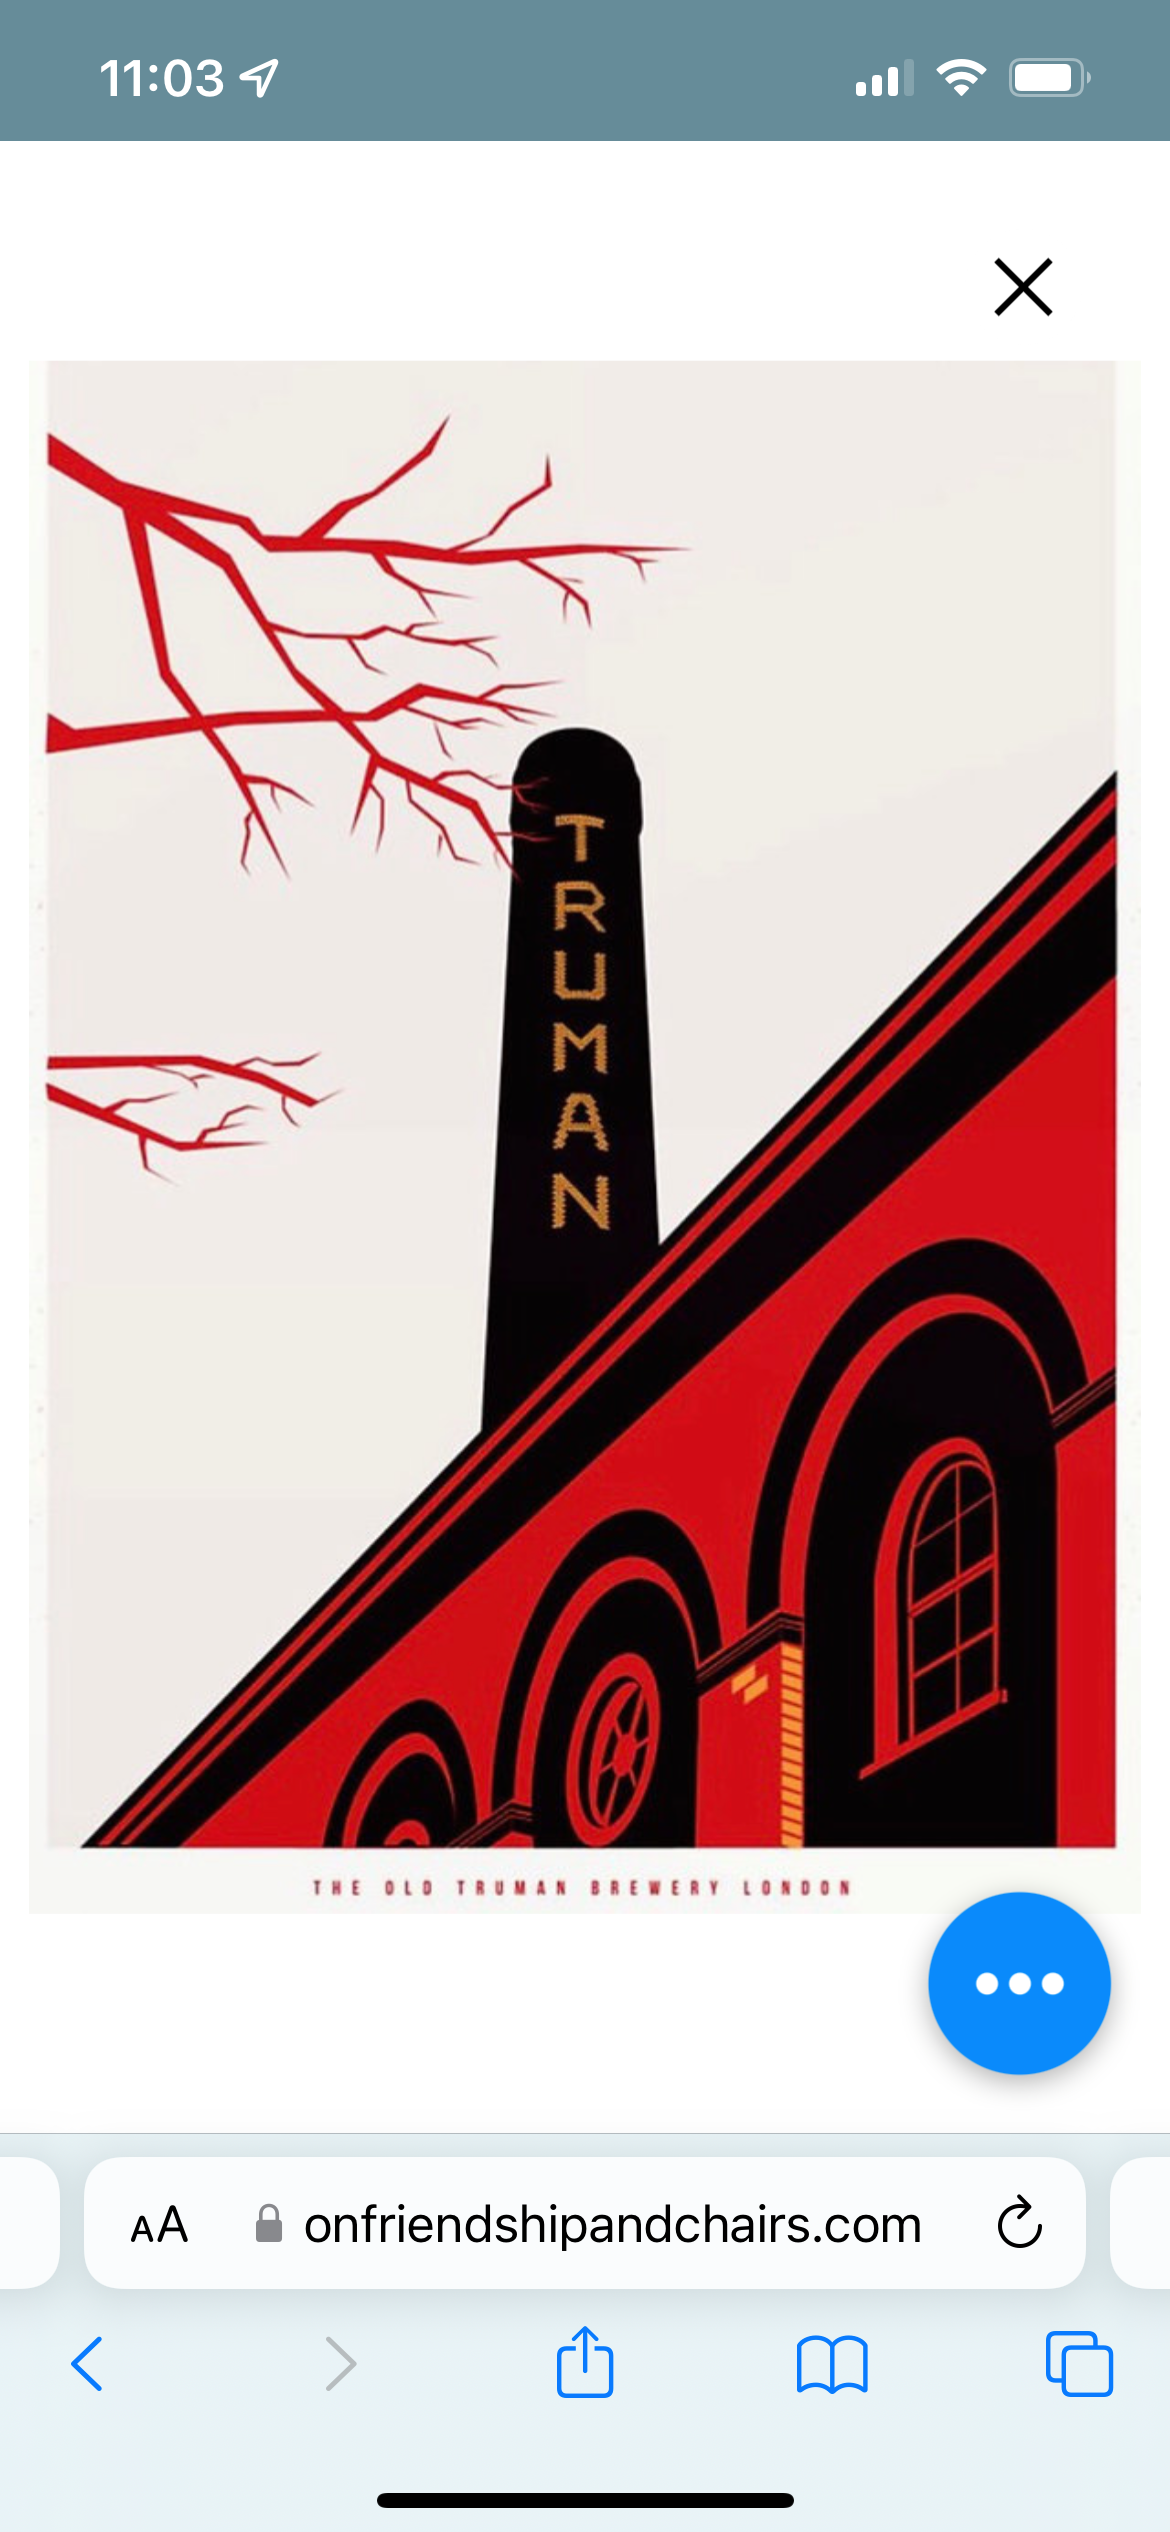 Truman Brewery Print - A3